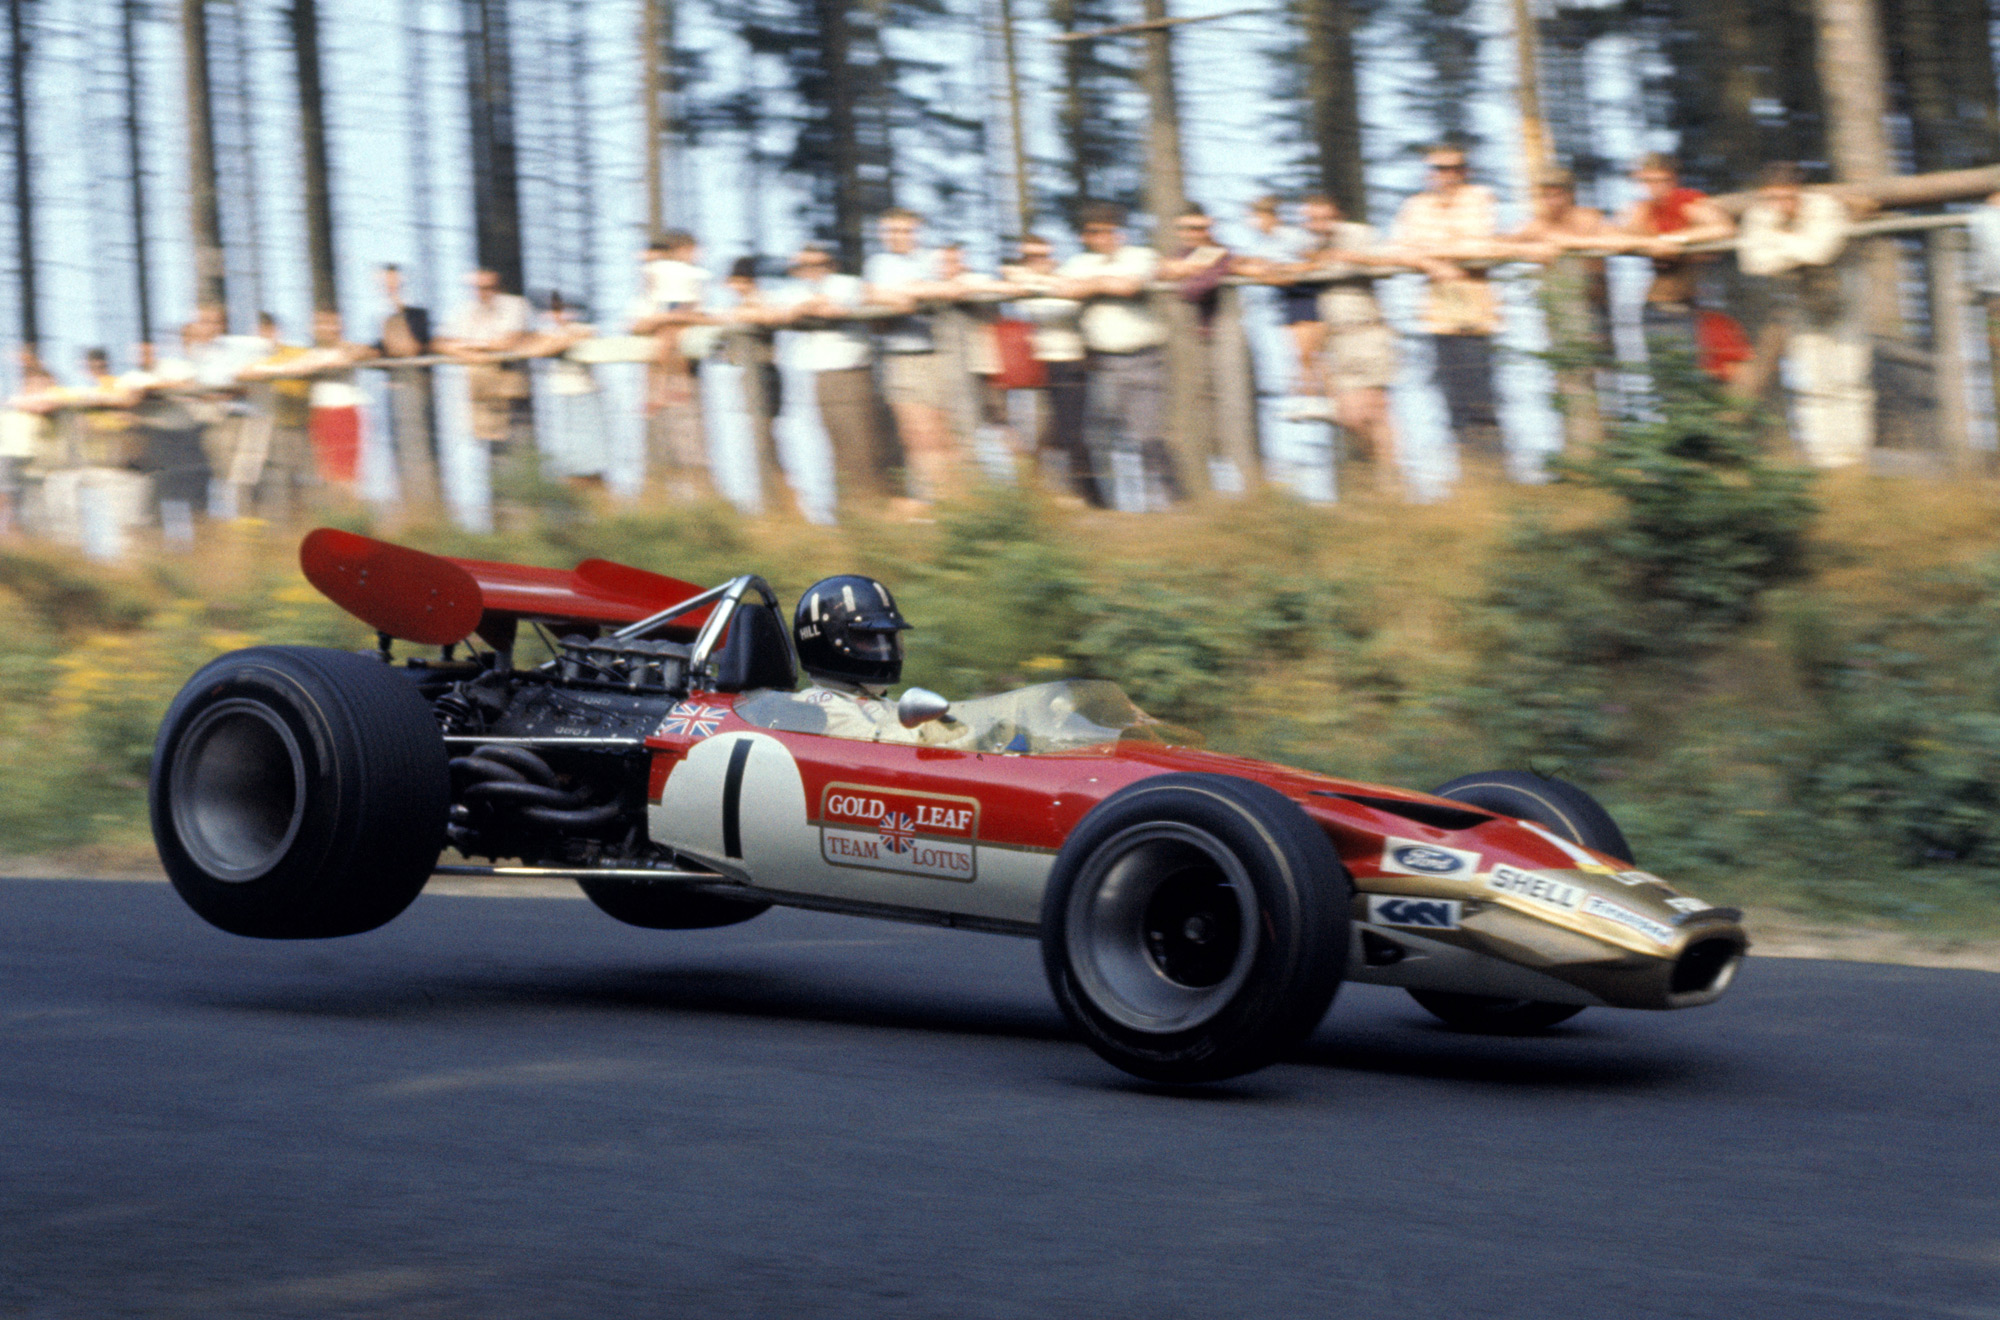 Ф 1 машина. Лотус ф1 1967. Болид ф1 Лотус. Лотус машина ф 1. Lotus Formula 1 1969.